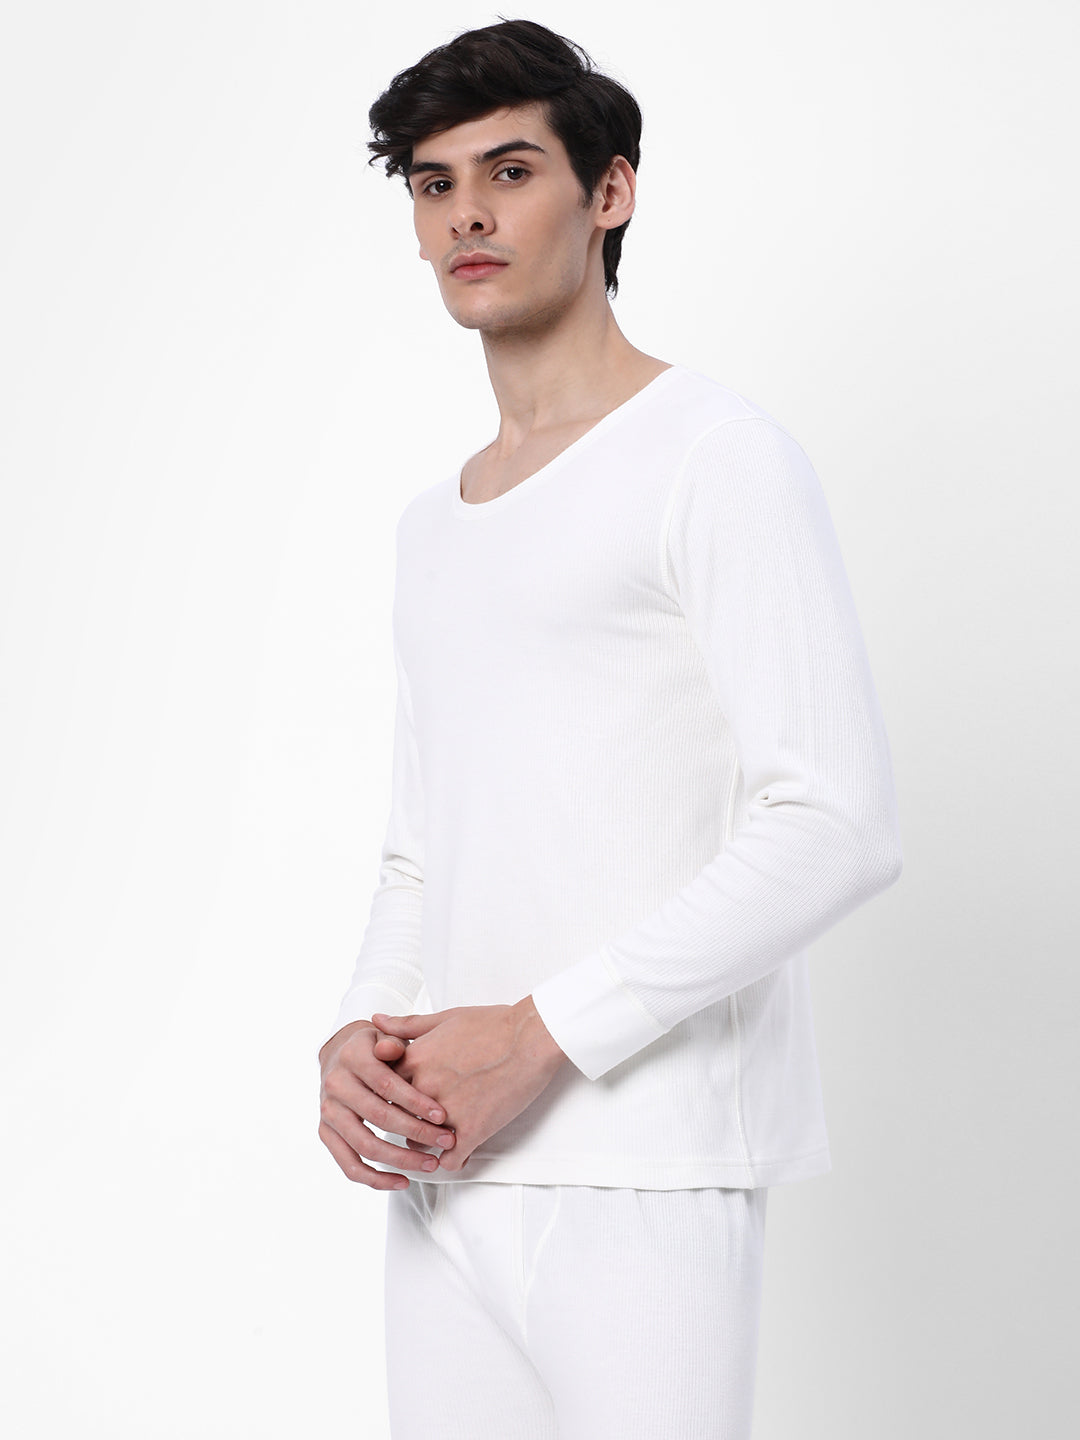 Buy Men's Cotton Thermal Top - White